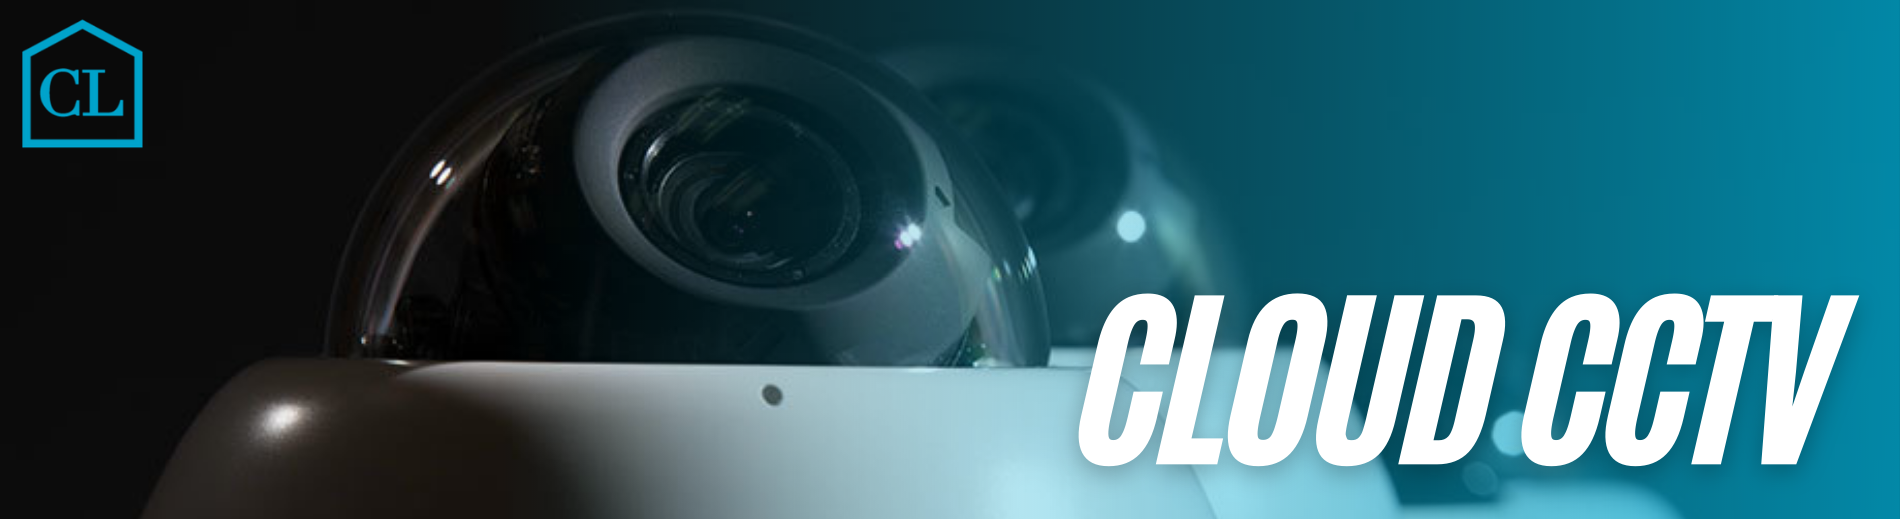 Cloud CCTV (3)